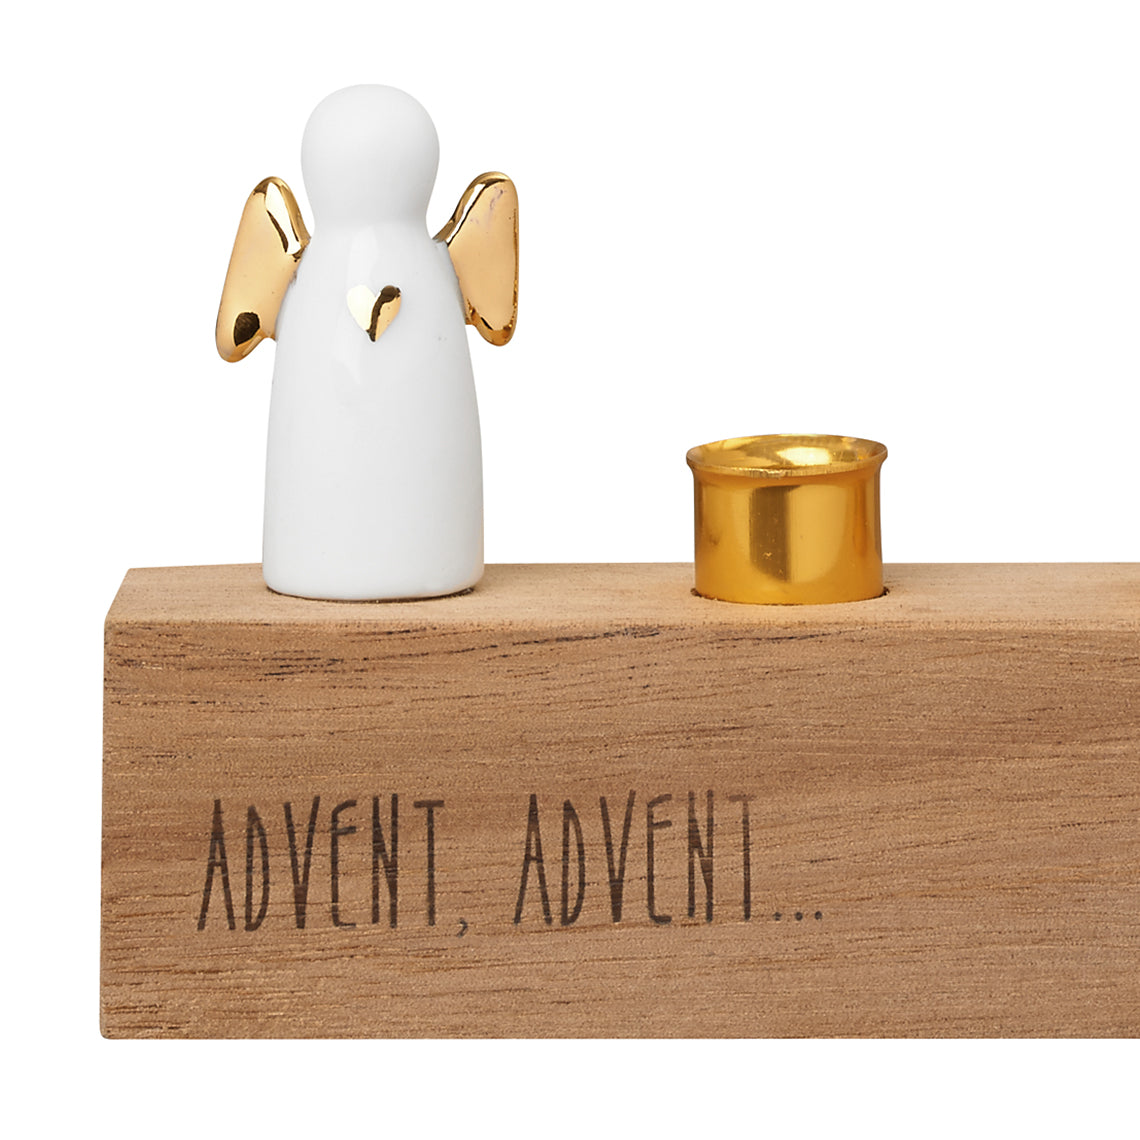 Adventsengel "Advent Advent..." - Räder